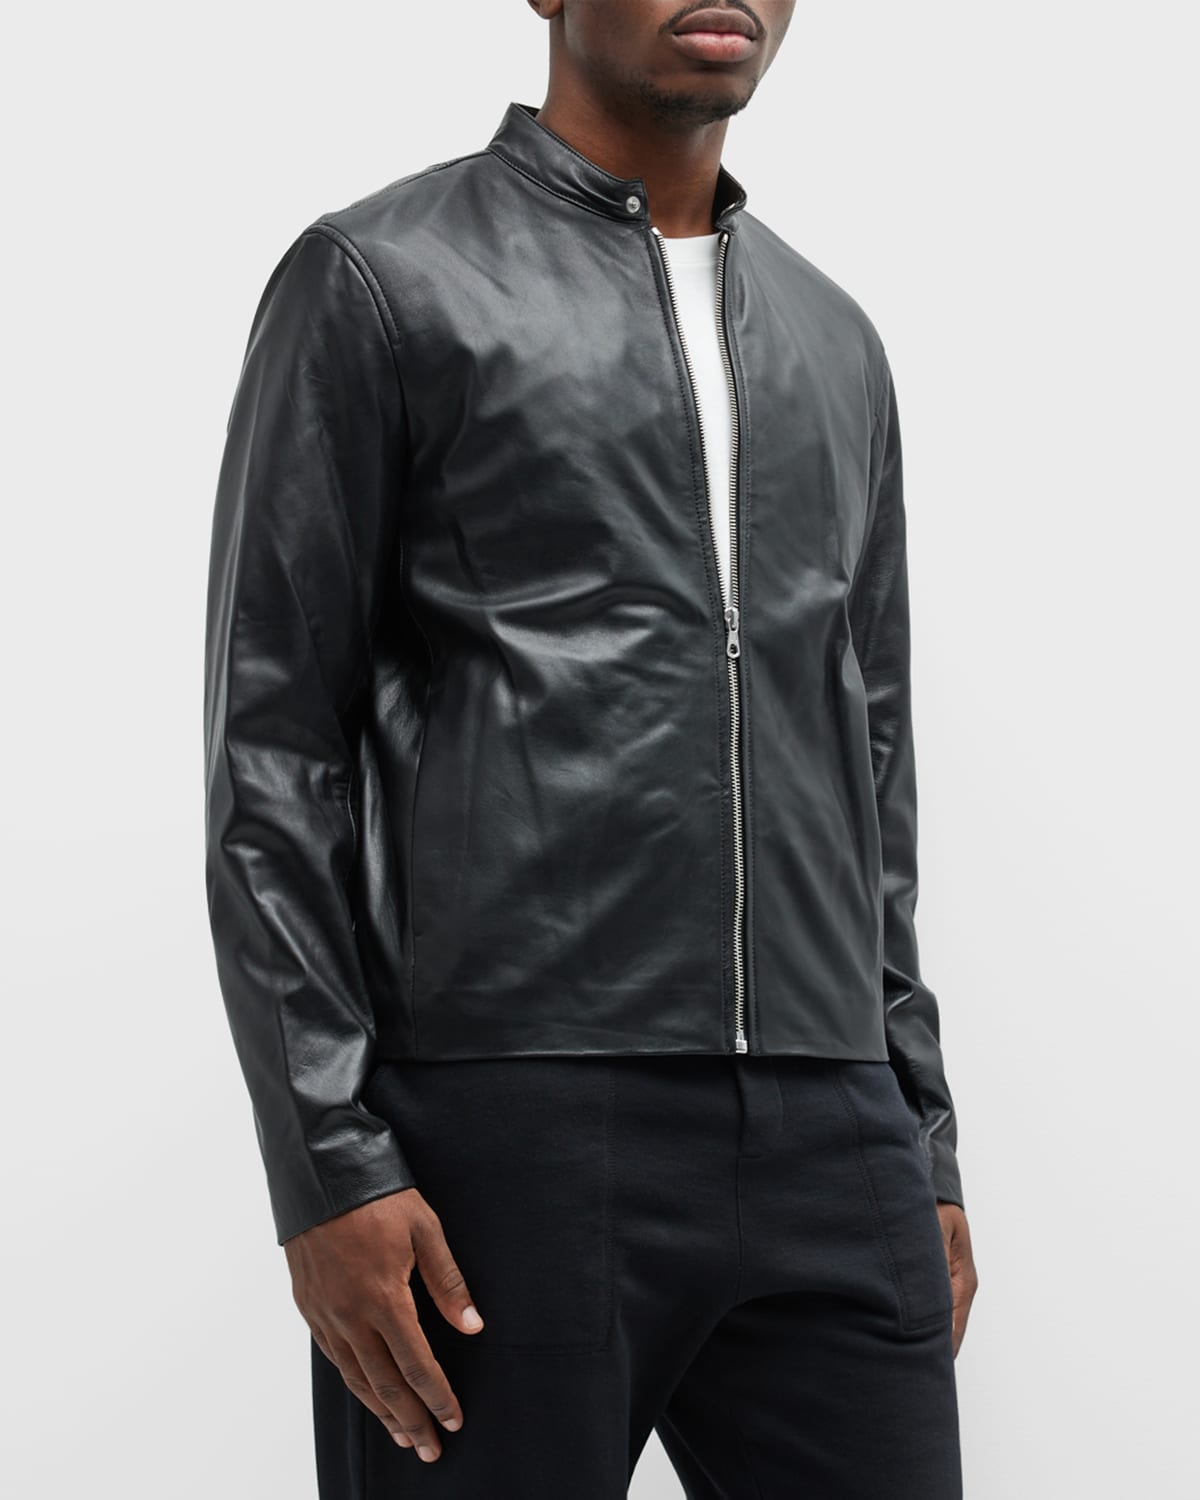 Men's Archive Cafe Racer Leather Jacket